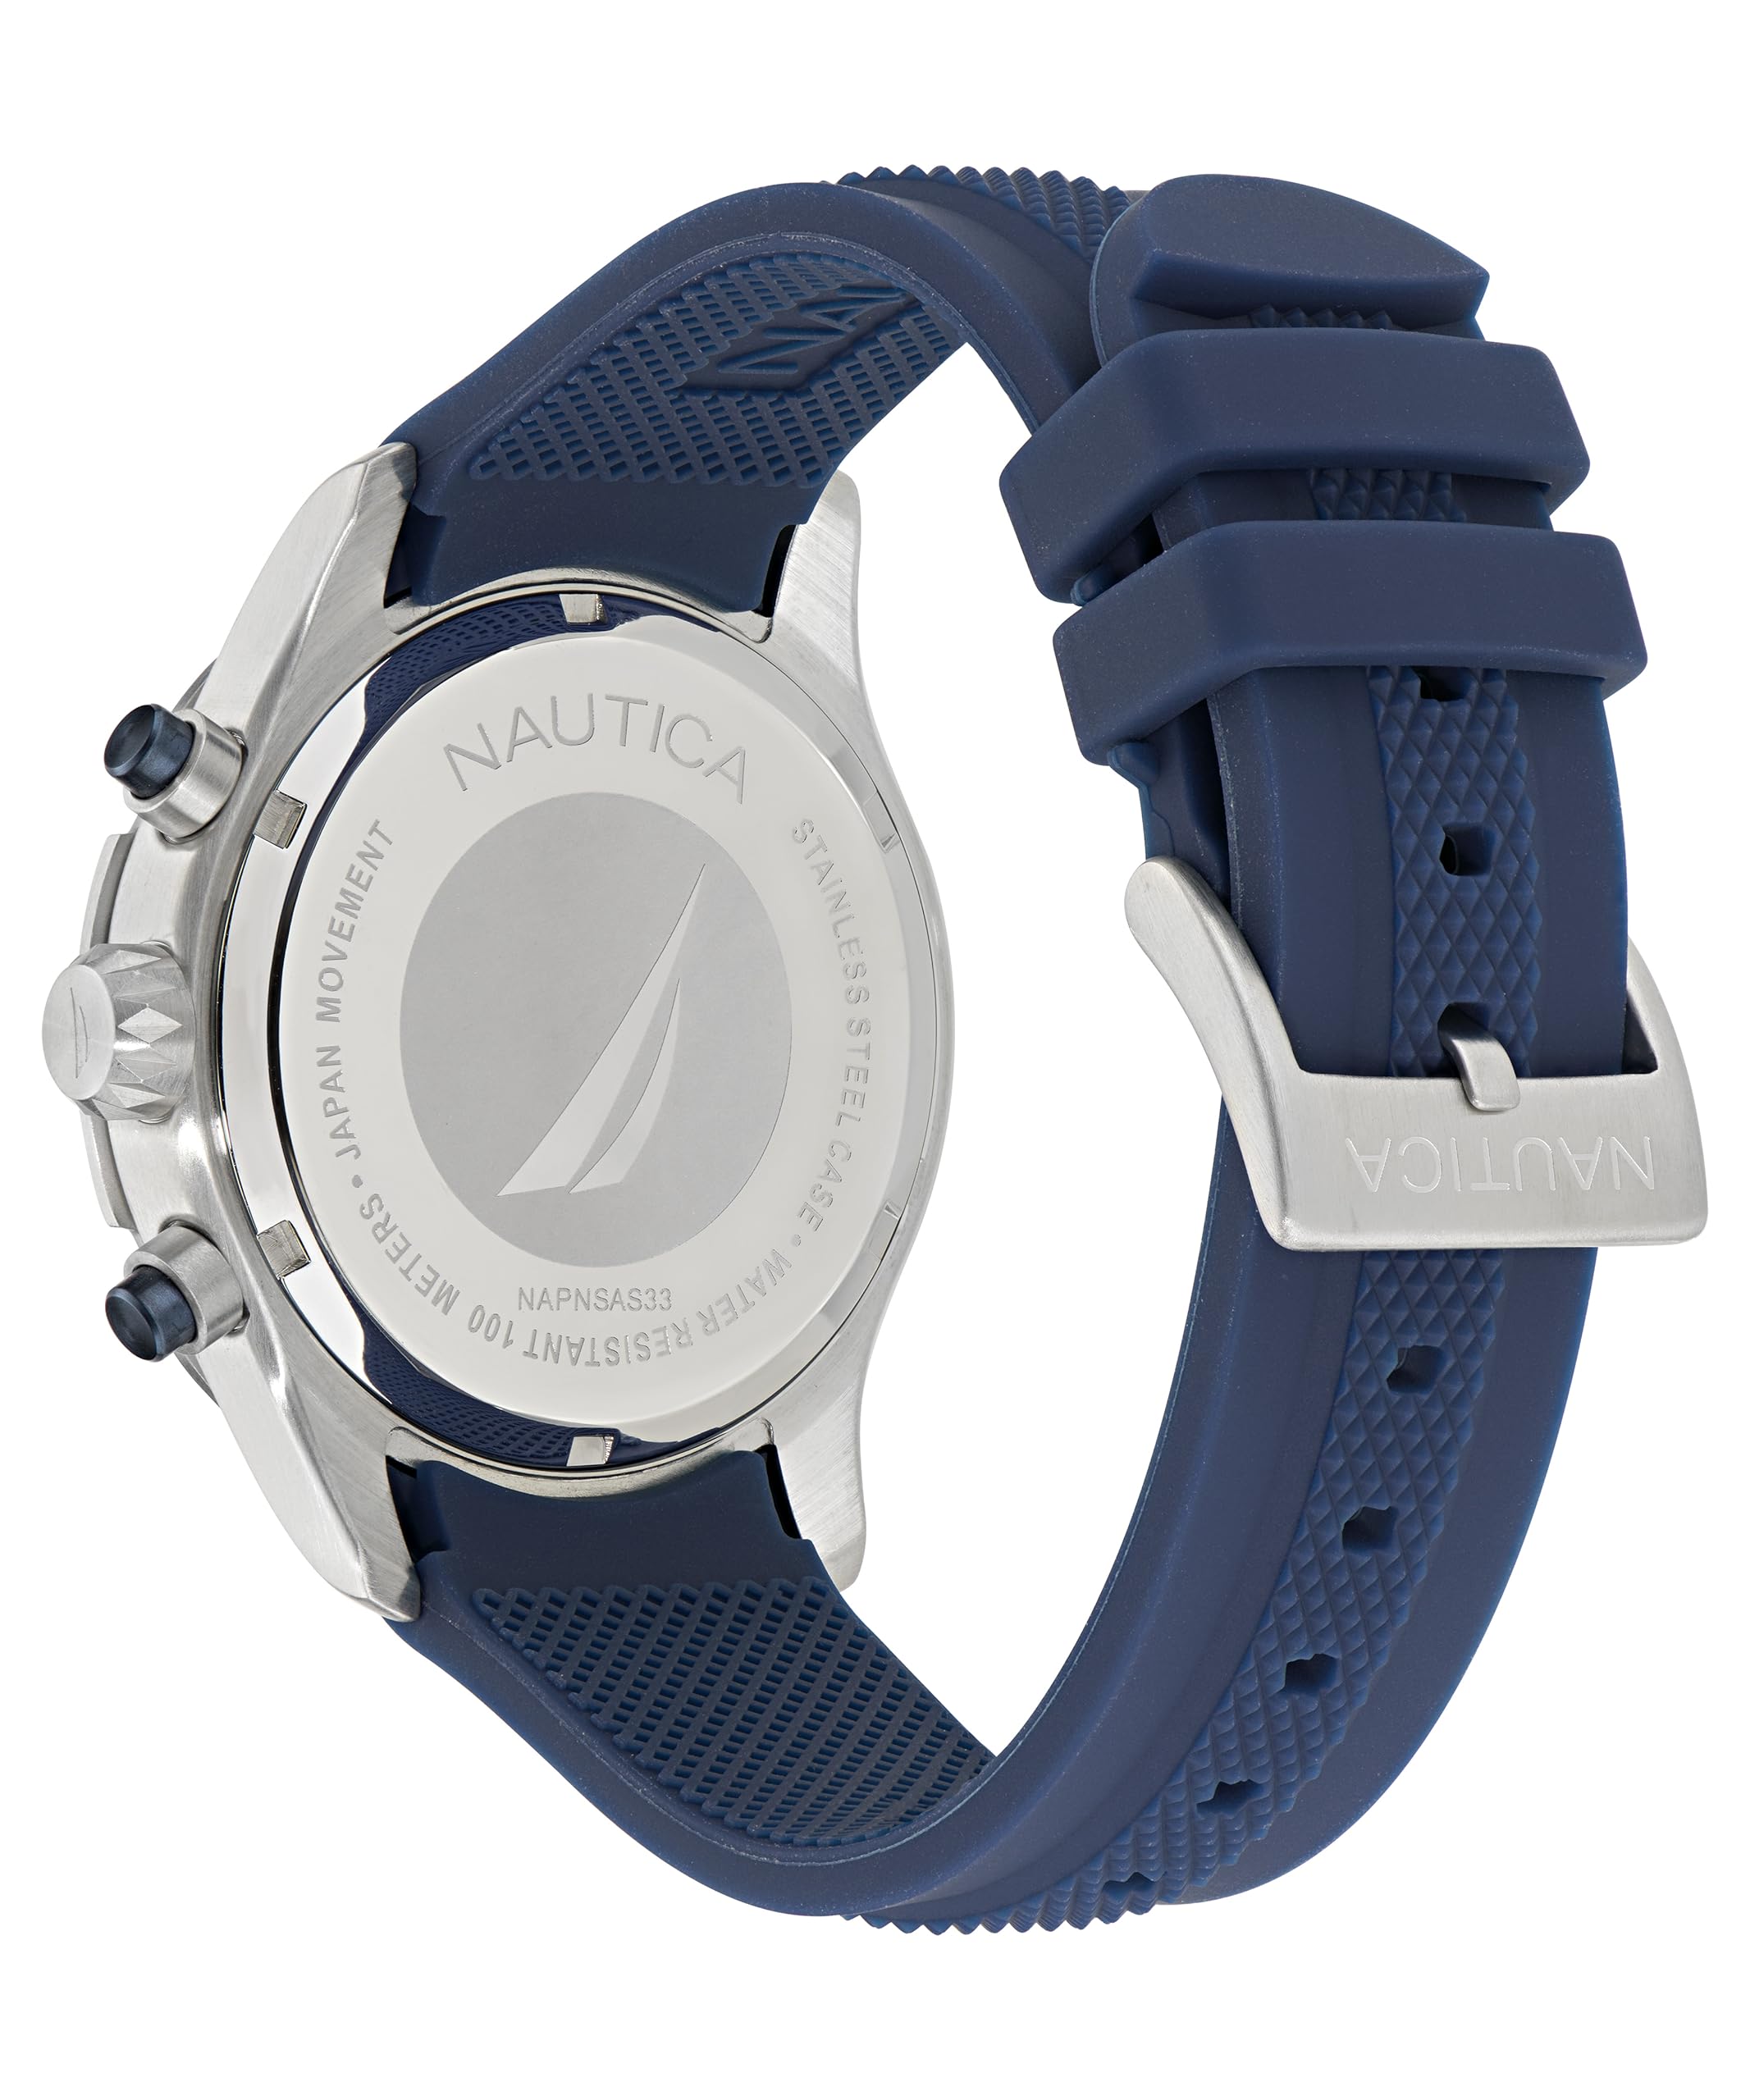 Nautica NST Blue Silicone Strap Watch (Model: NAPNSAS33)